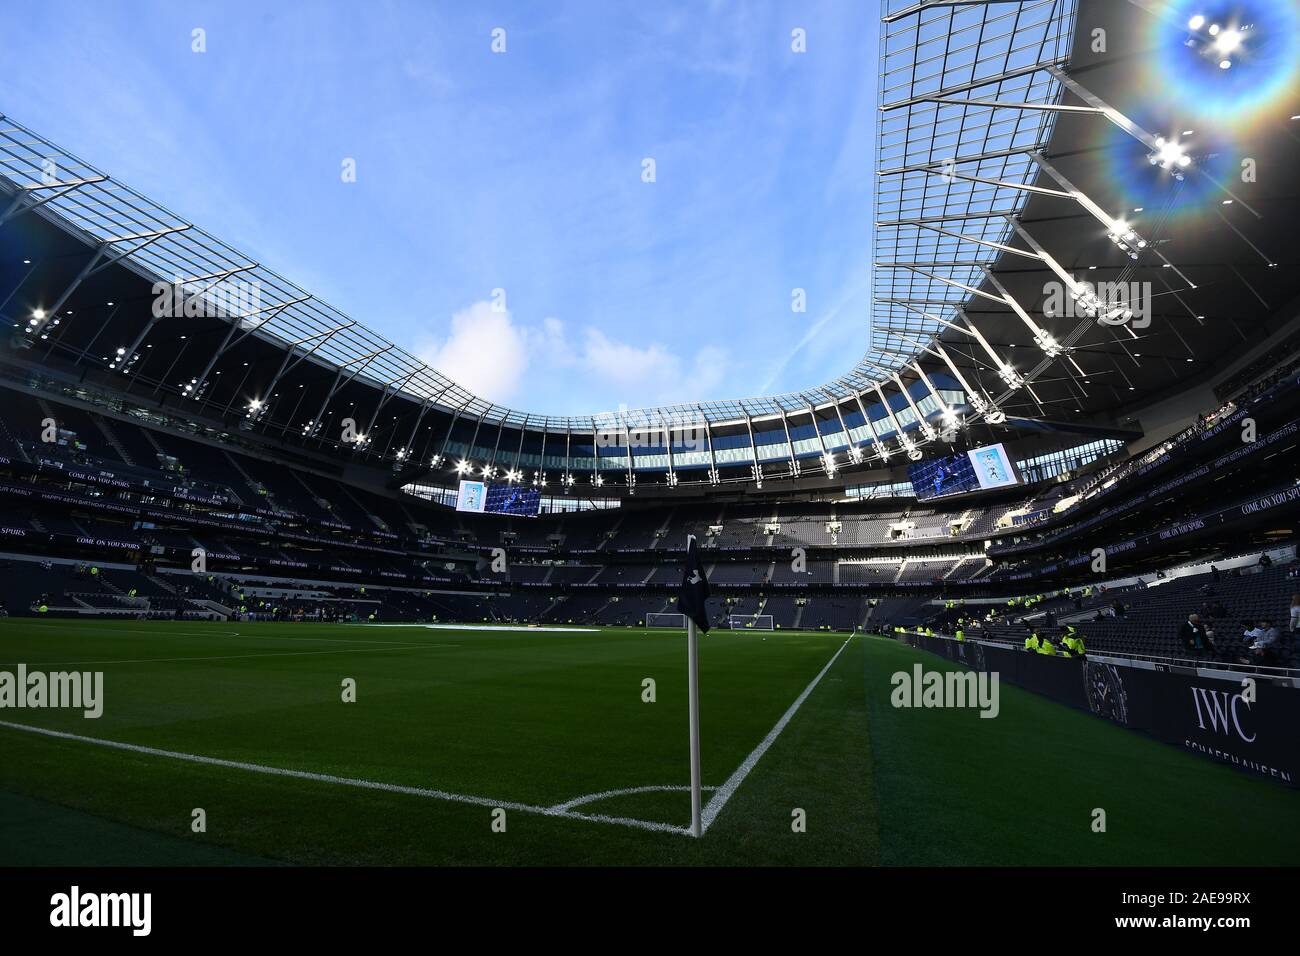 Tottenham to wear commemorative shirt in final White Hart Lane game, Football News